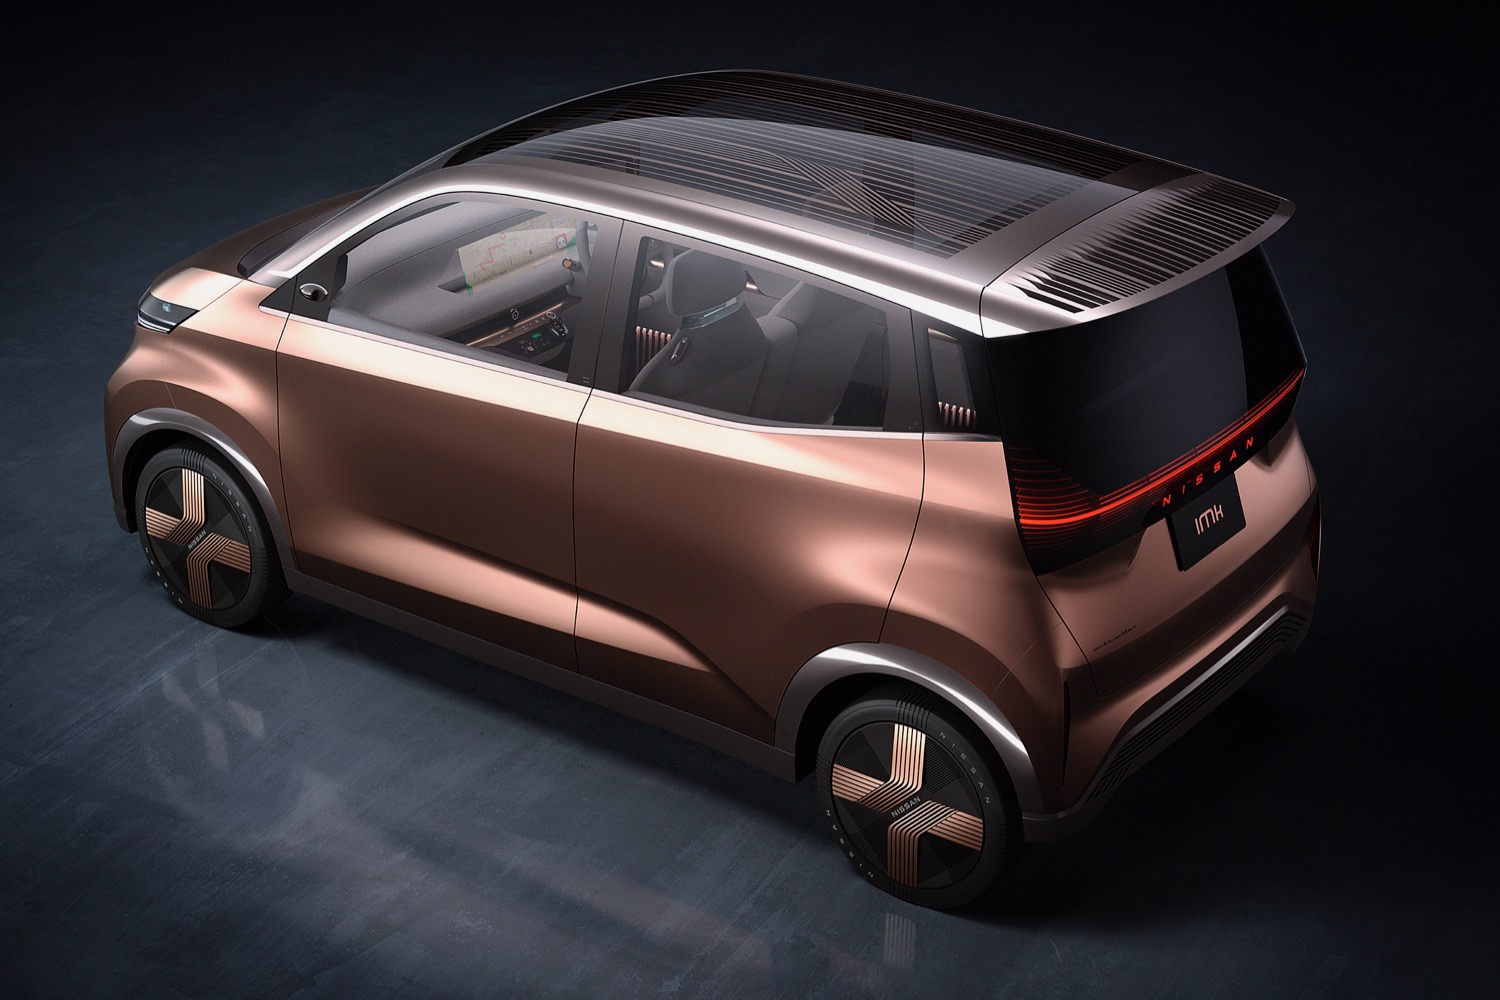 nissan imk concept electric car 2019 tokyo motor show